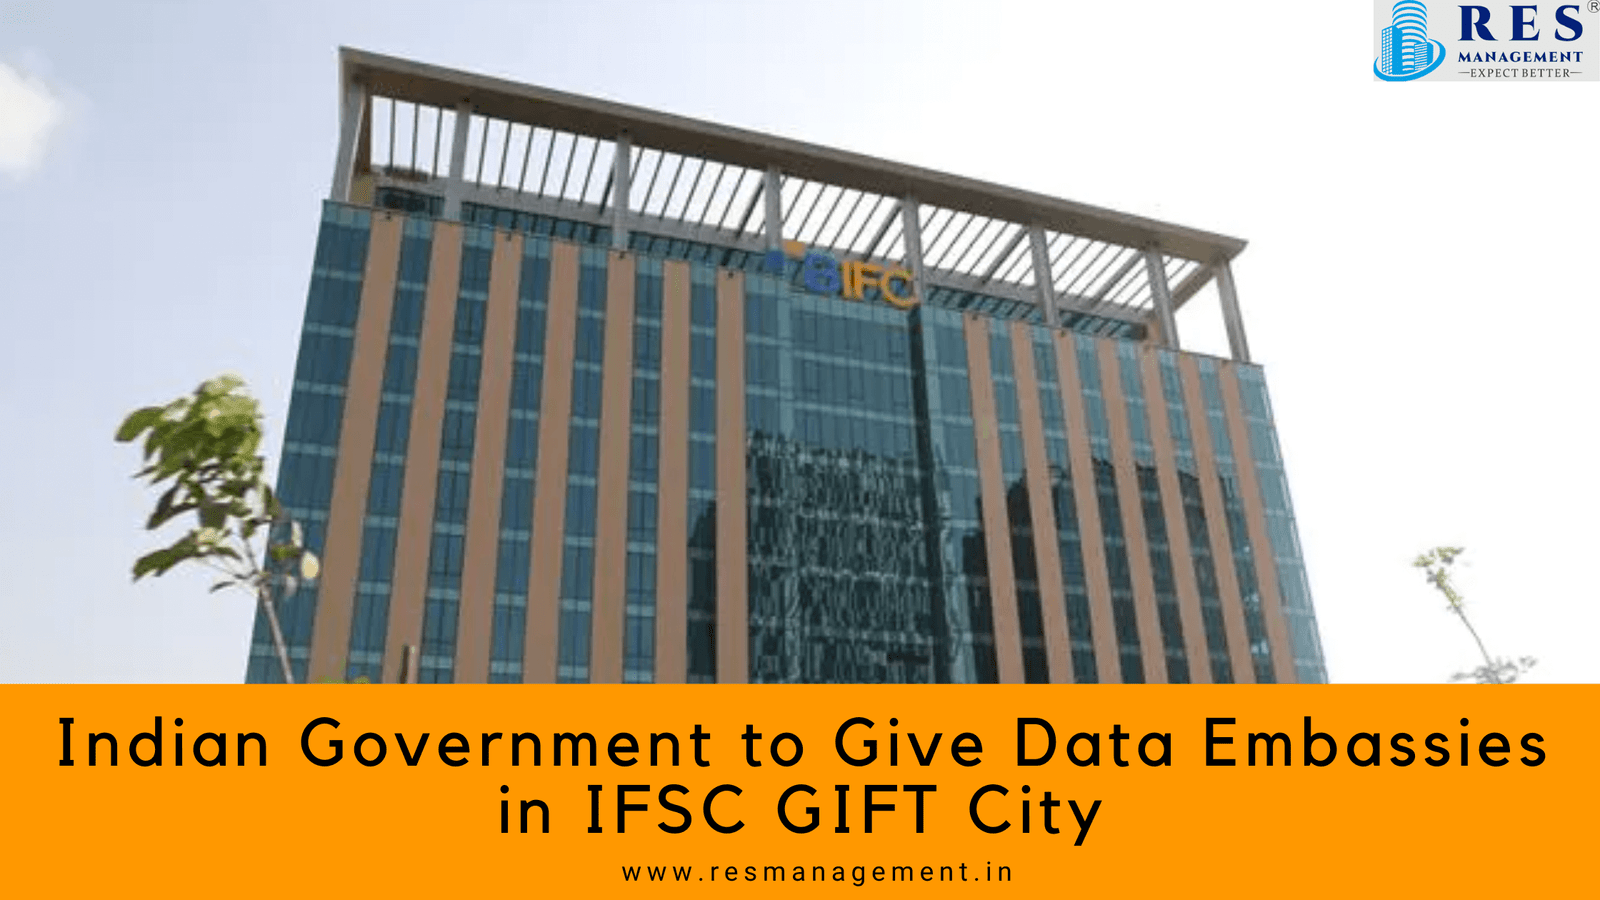 SBI Raises $500 Million Through IFSC Gift City Branch